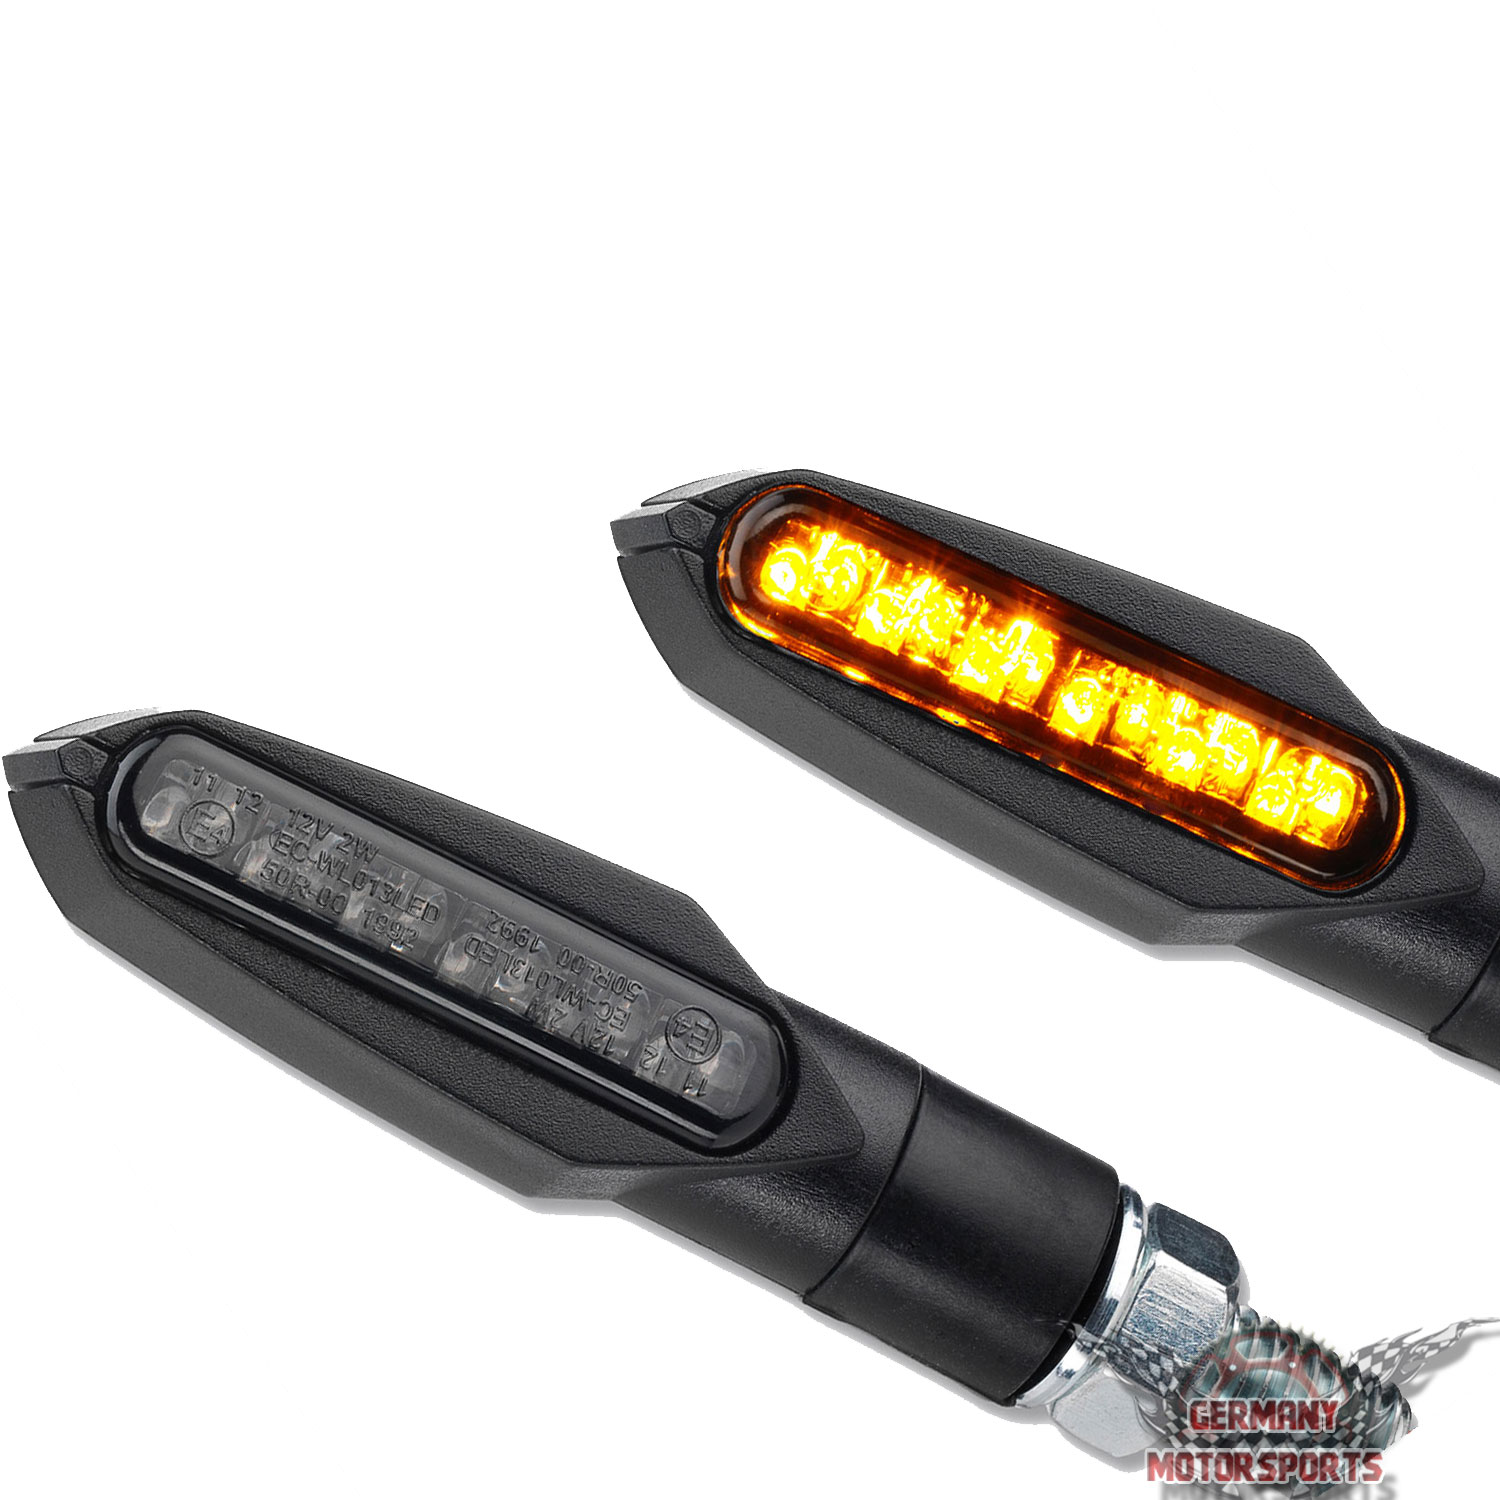 Set: 2x Mini-Blinker 12V LED - für Moped und Motorrad von VEBCO